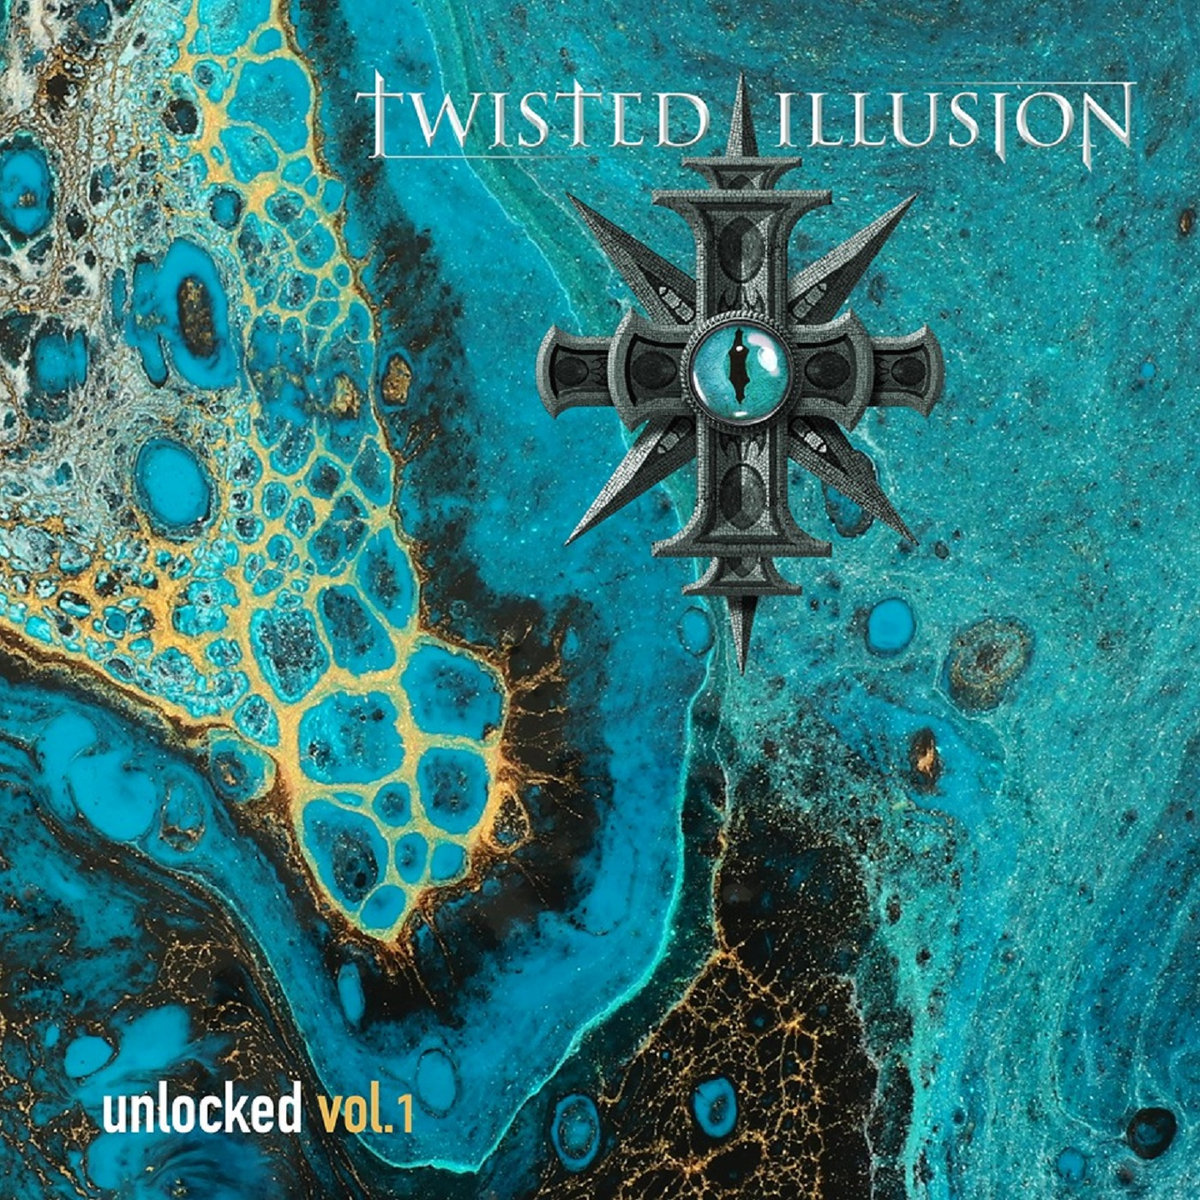 Unlocked Vol 1 Twisted Illusion